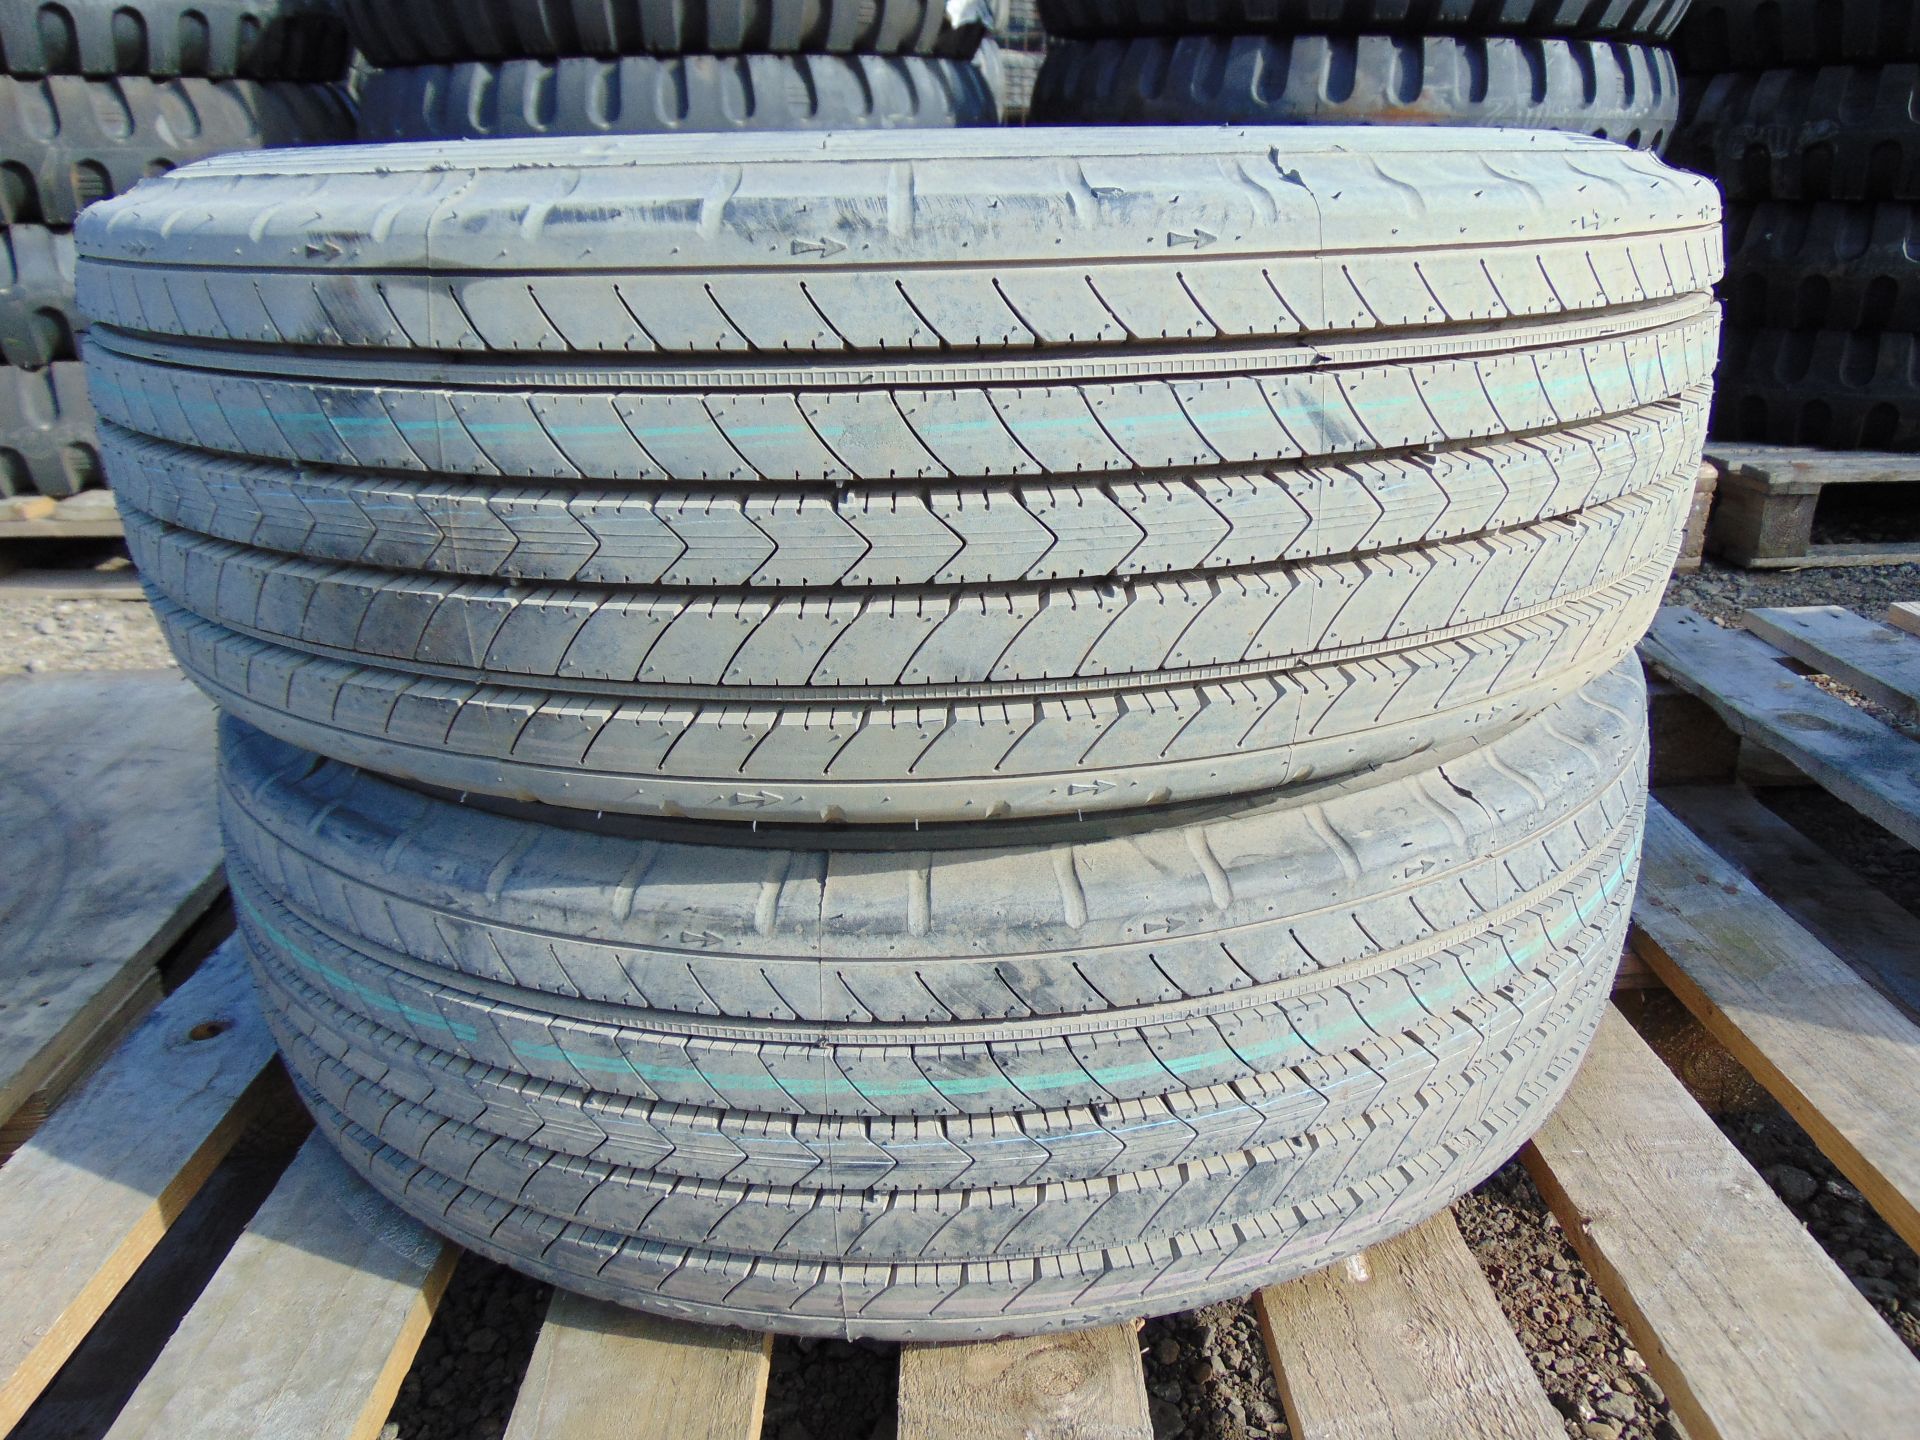 2 x Bridgestone R227 225/75 R17.5 Tyres - Image 6 of 7